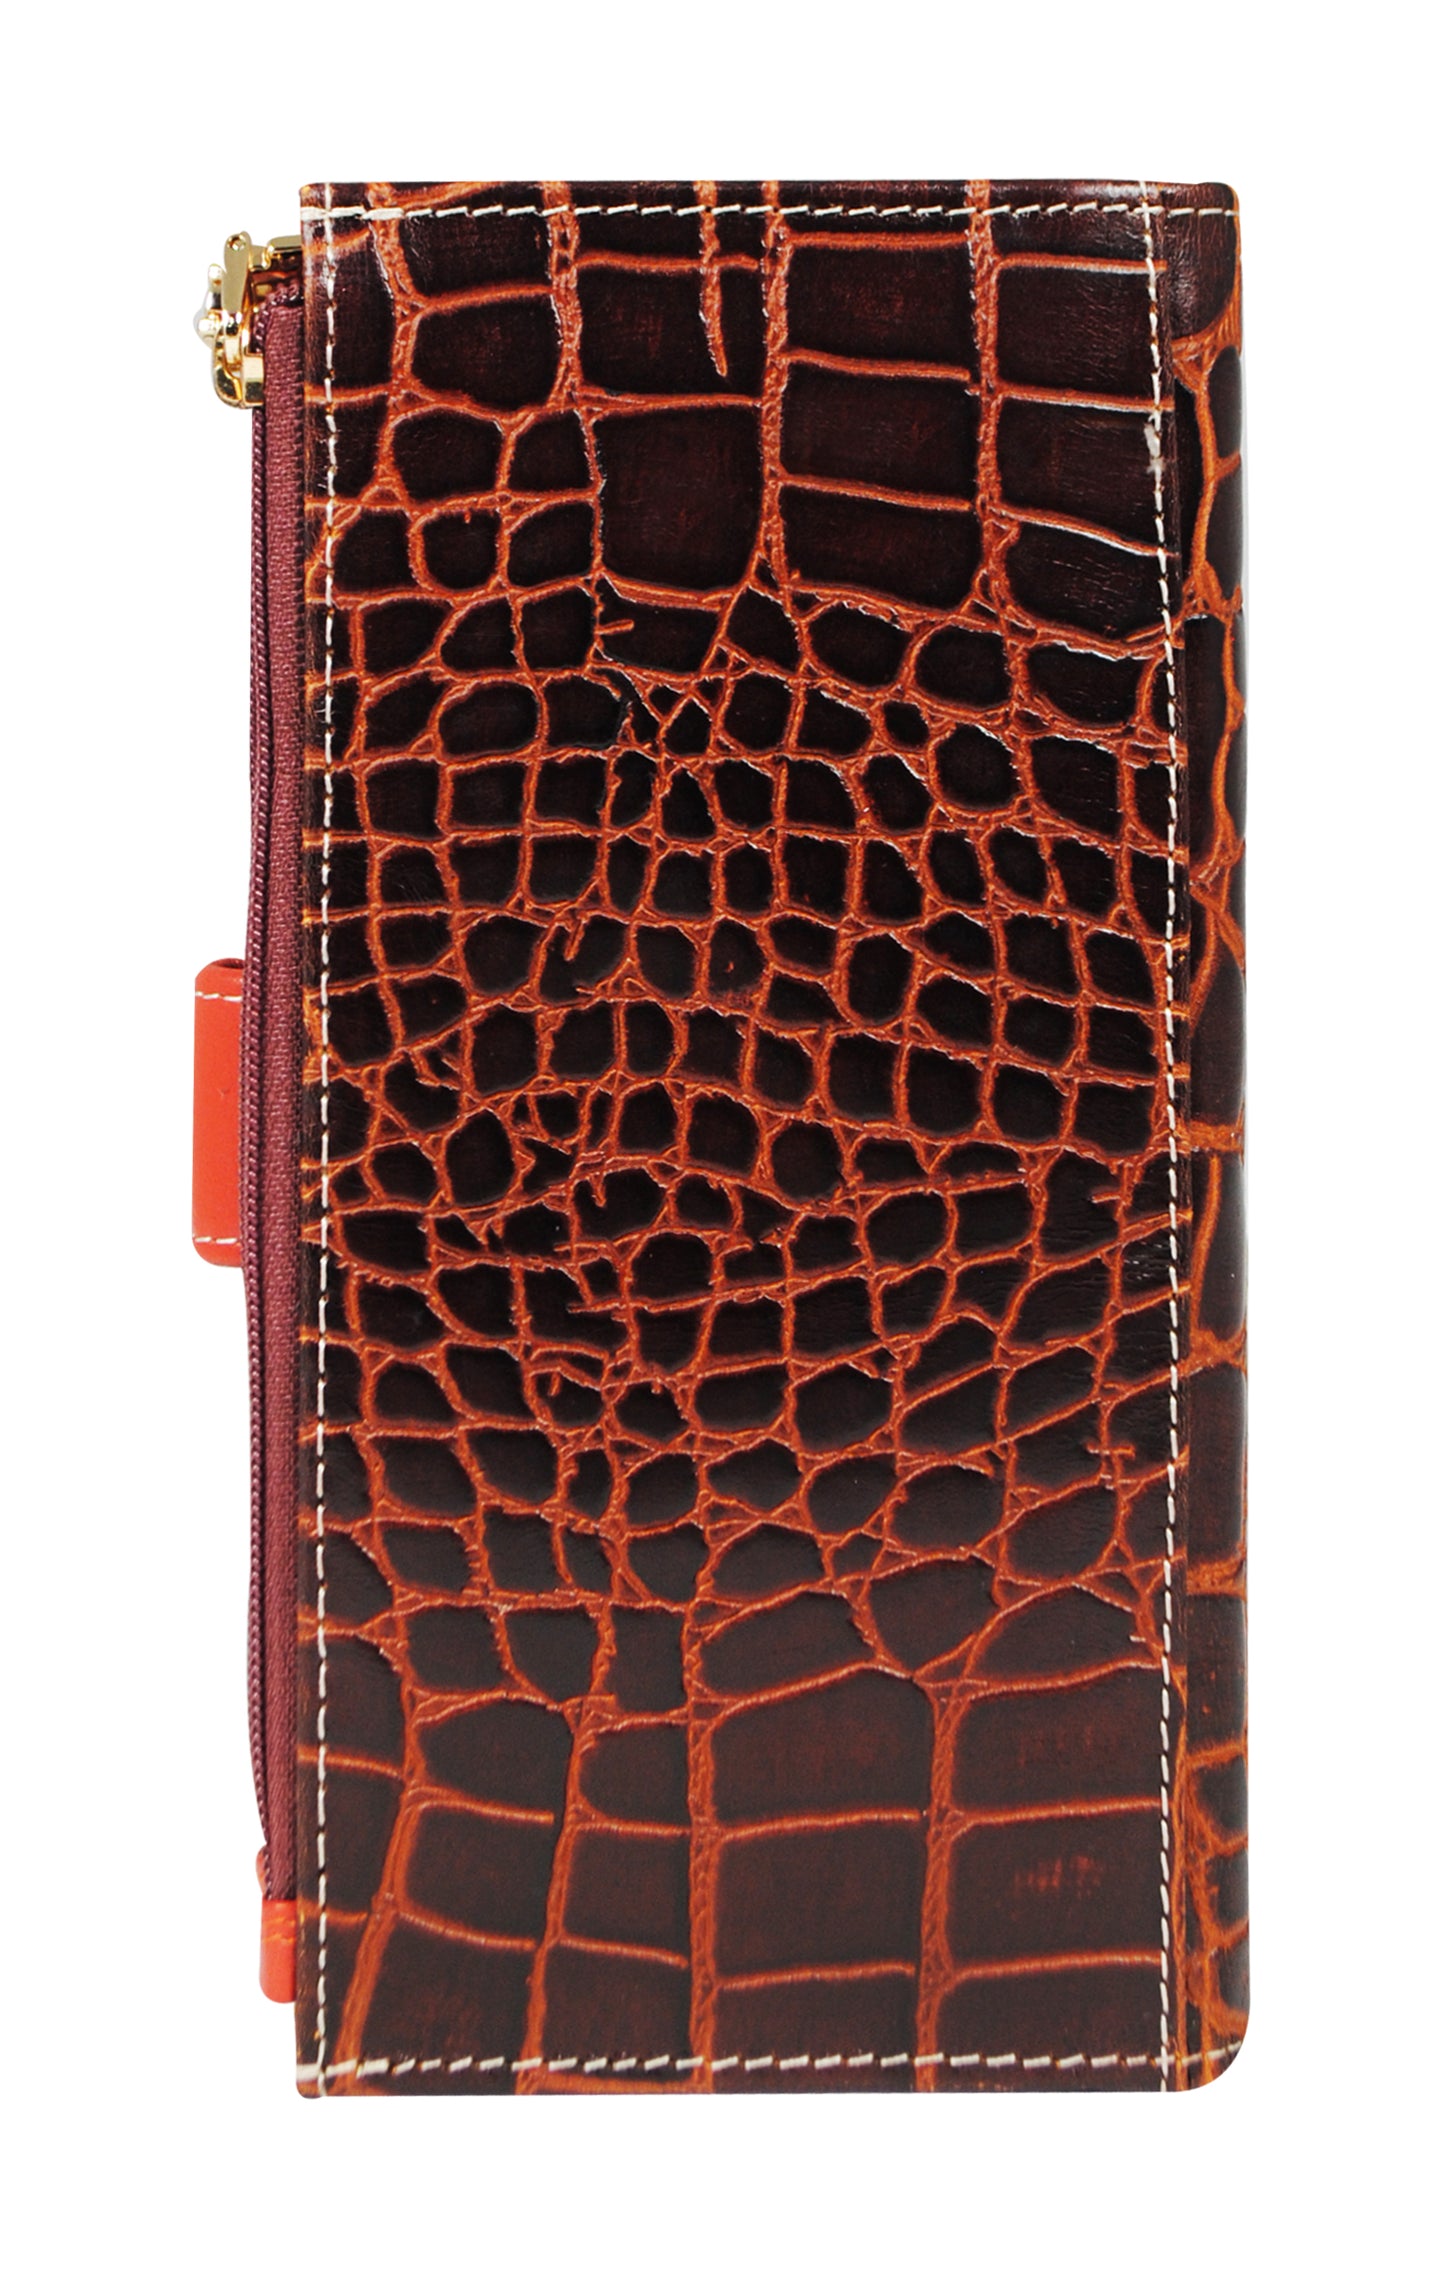 Calfnero Genuine Leather Women's wallet (1011-Brown-Coco)